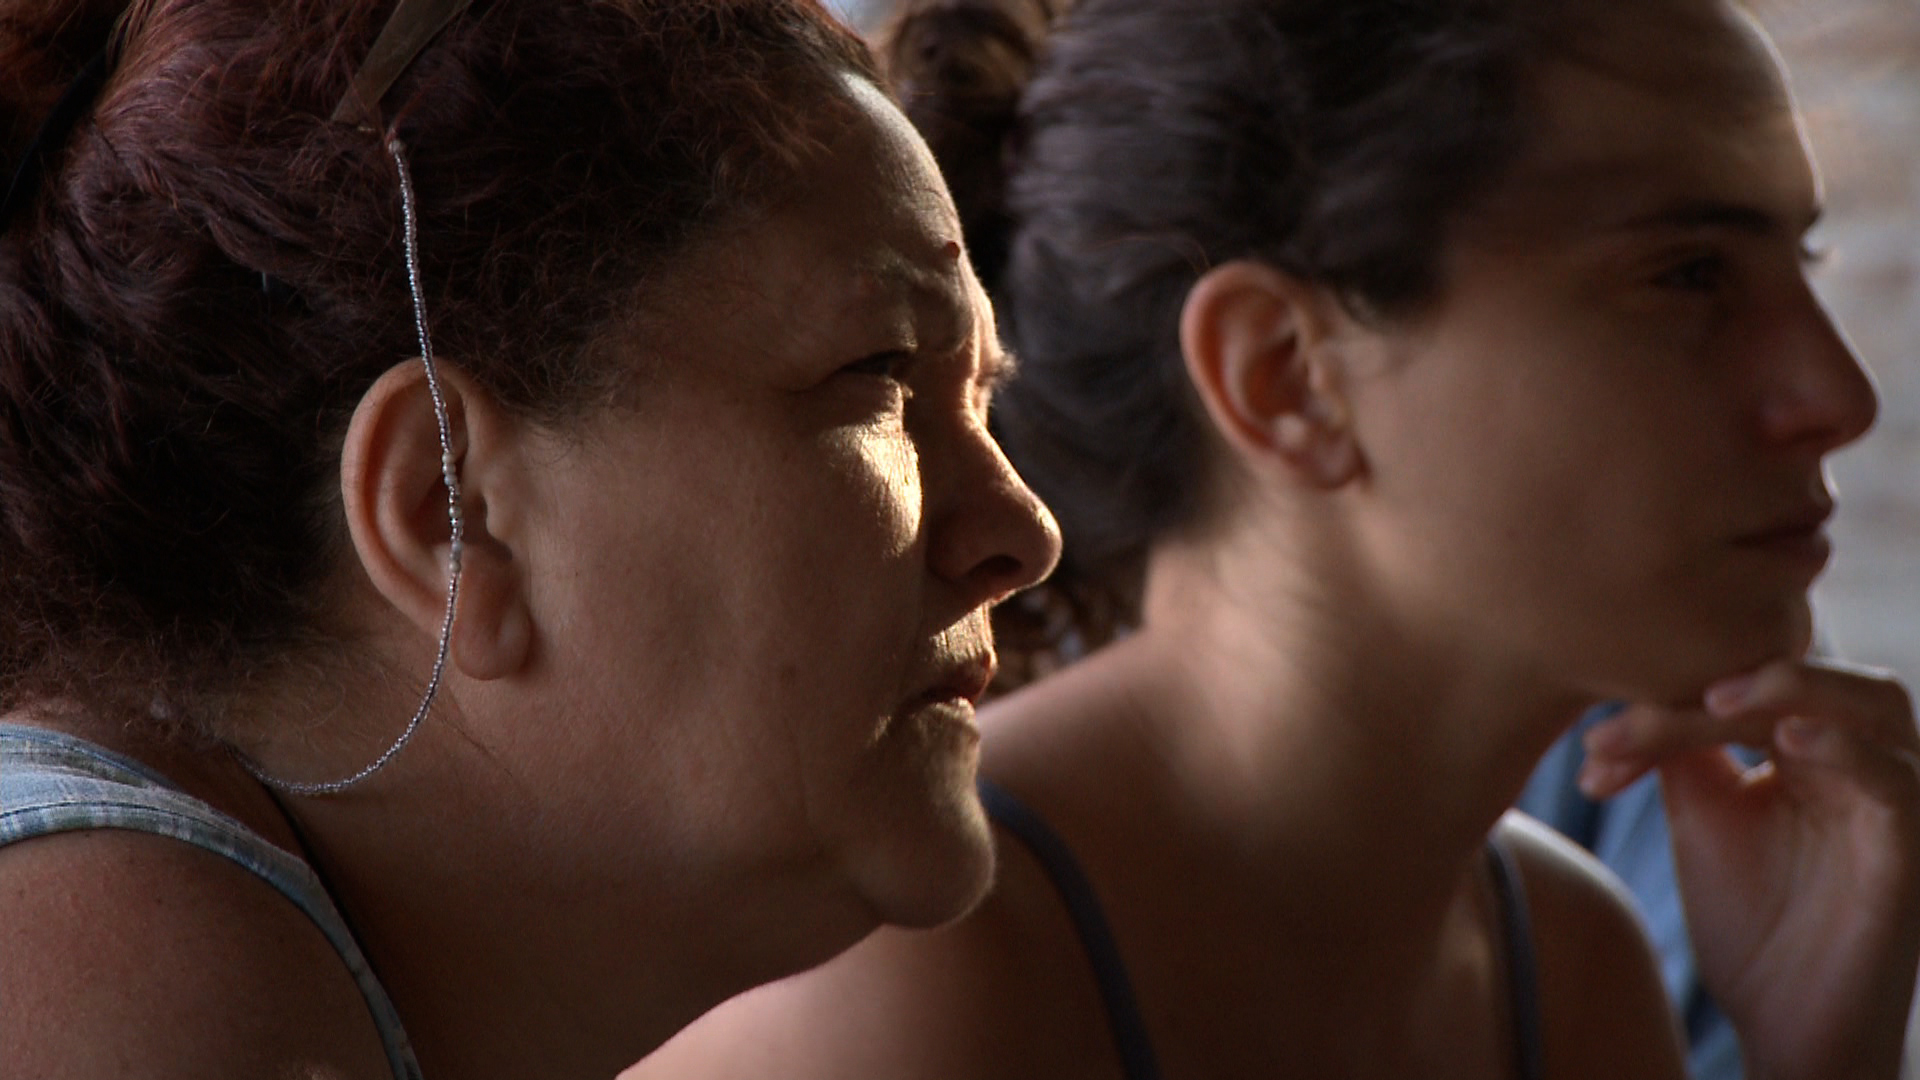 Kadr z filmu "Los labios"